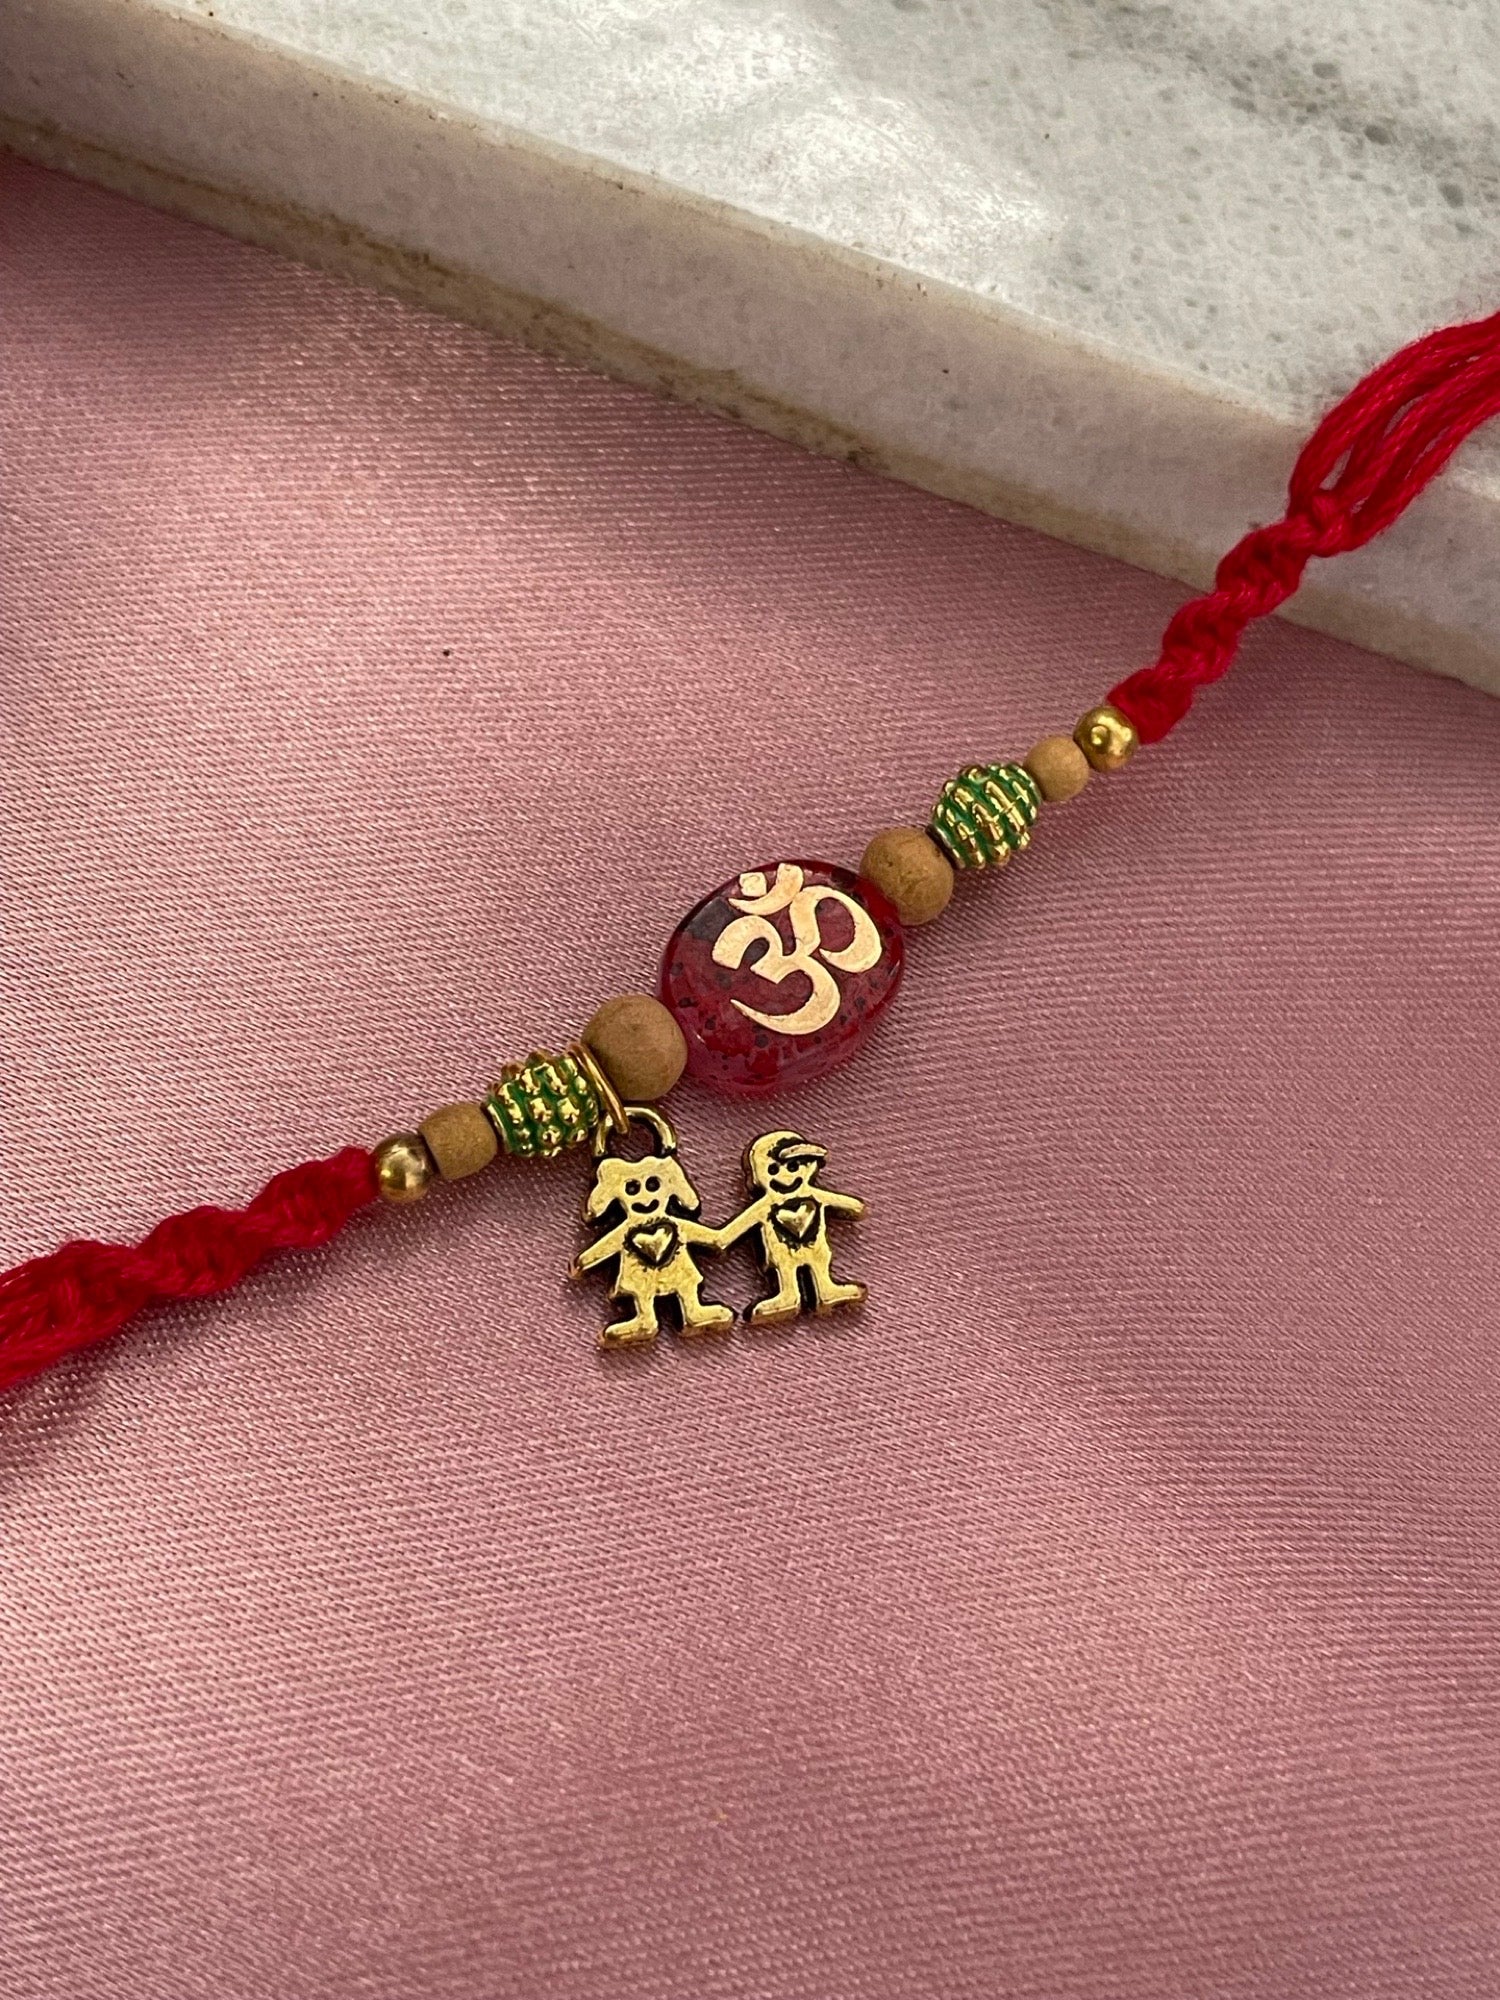 Stylish Stone work Bracelet Rakhi: Gift/Send Rakhi Gifts Online J11036274  |IGP.com